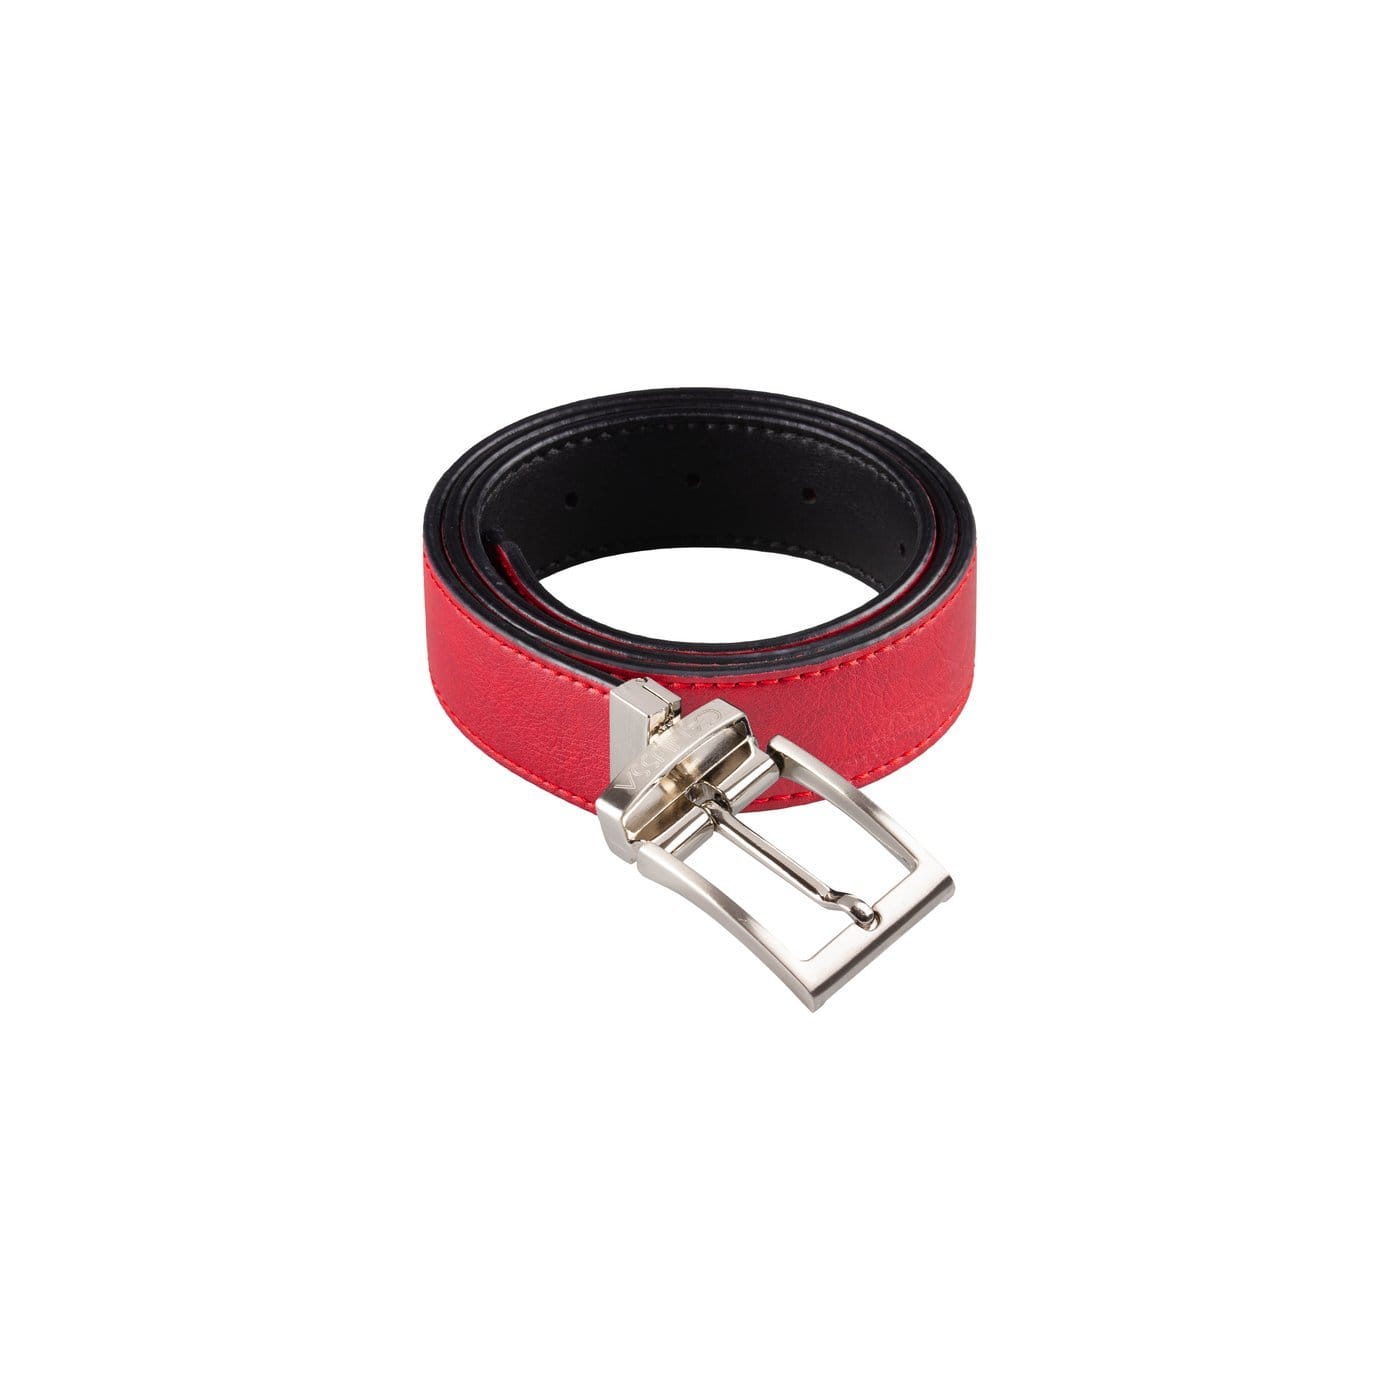 Canussa Reversible Vegan Leather Belt | Black & Red